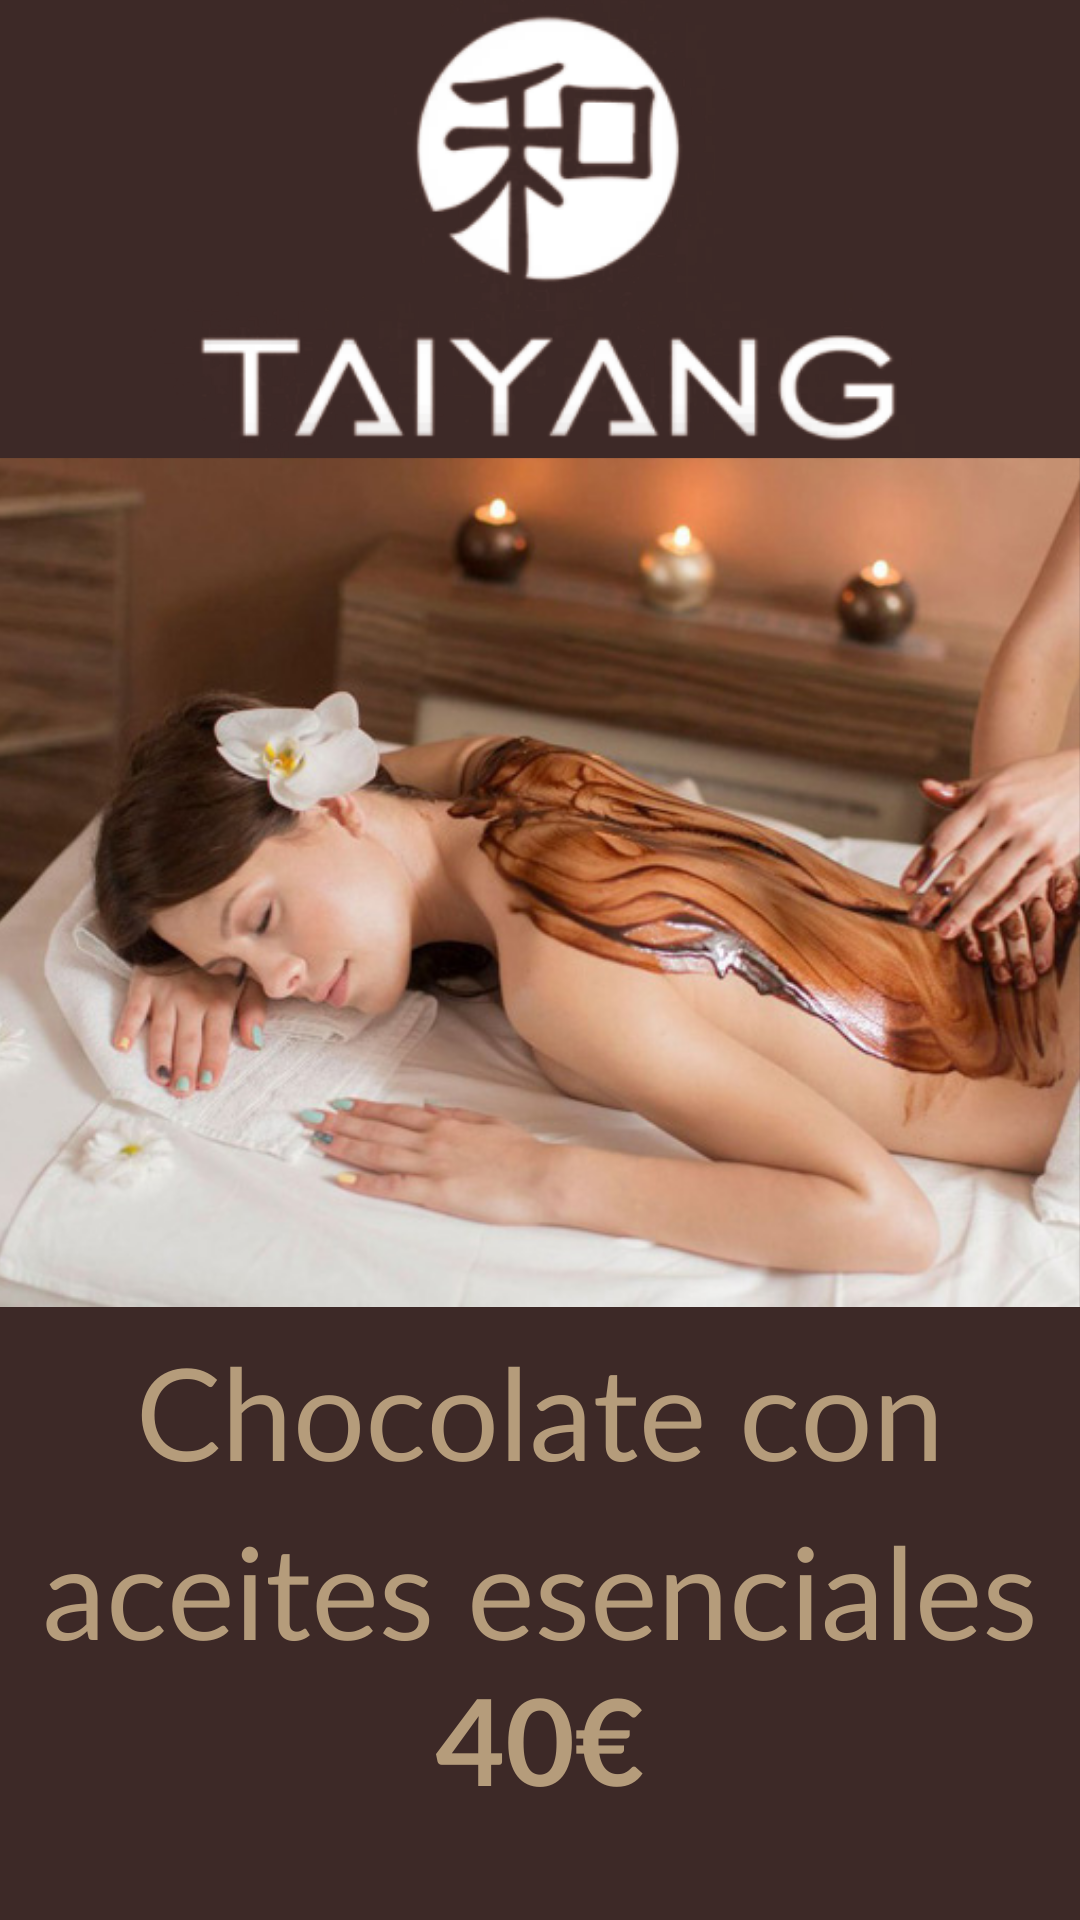 Chocolate story